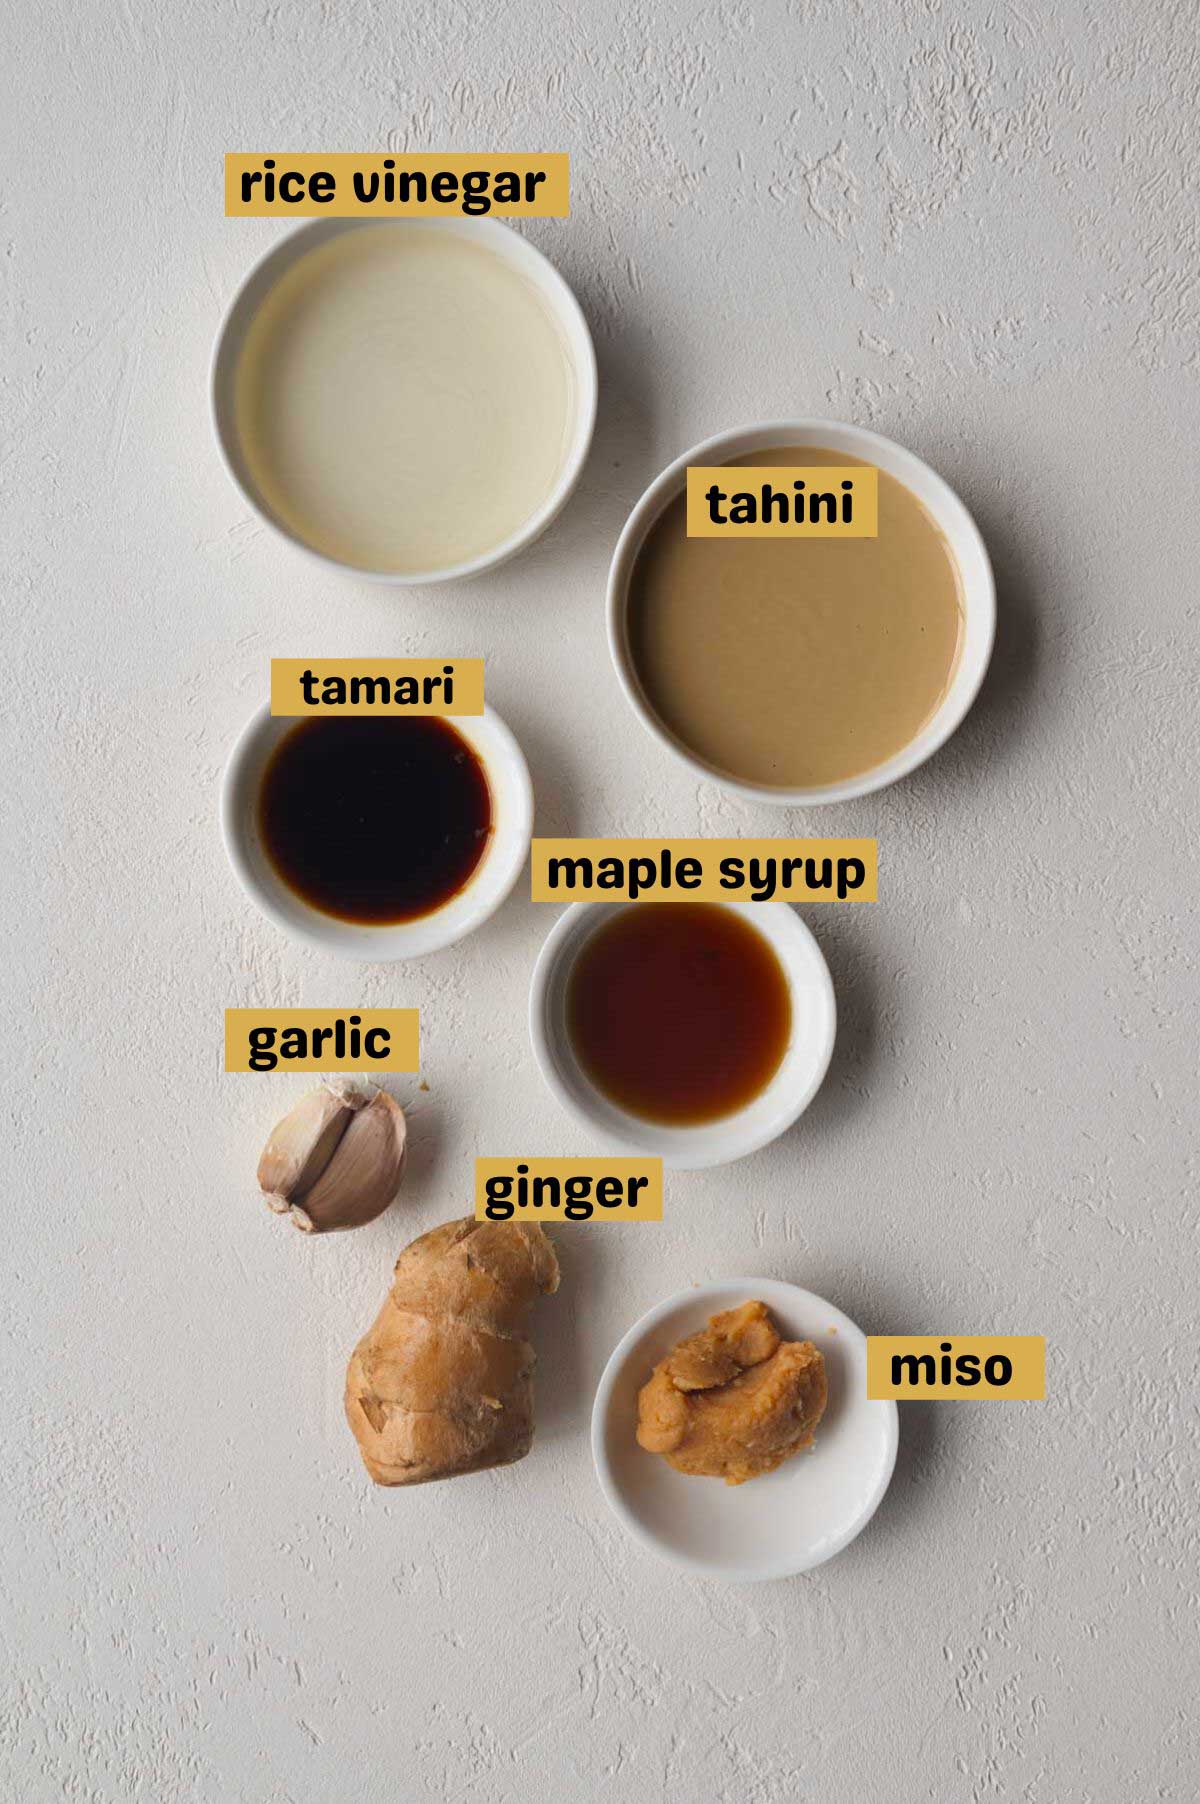 Rice vinegar, tahini, tamari, maple syrup, tamari, garlic, ginger, and white miso.